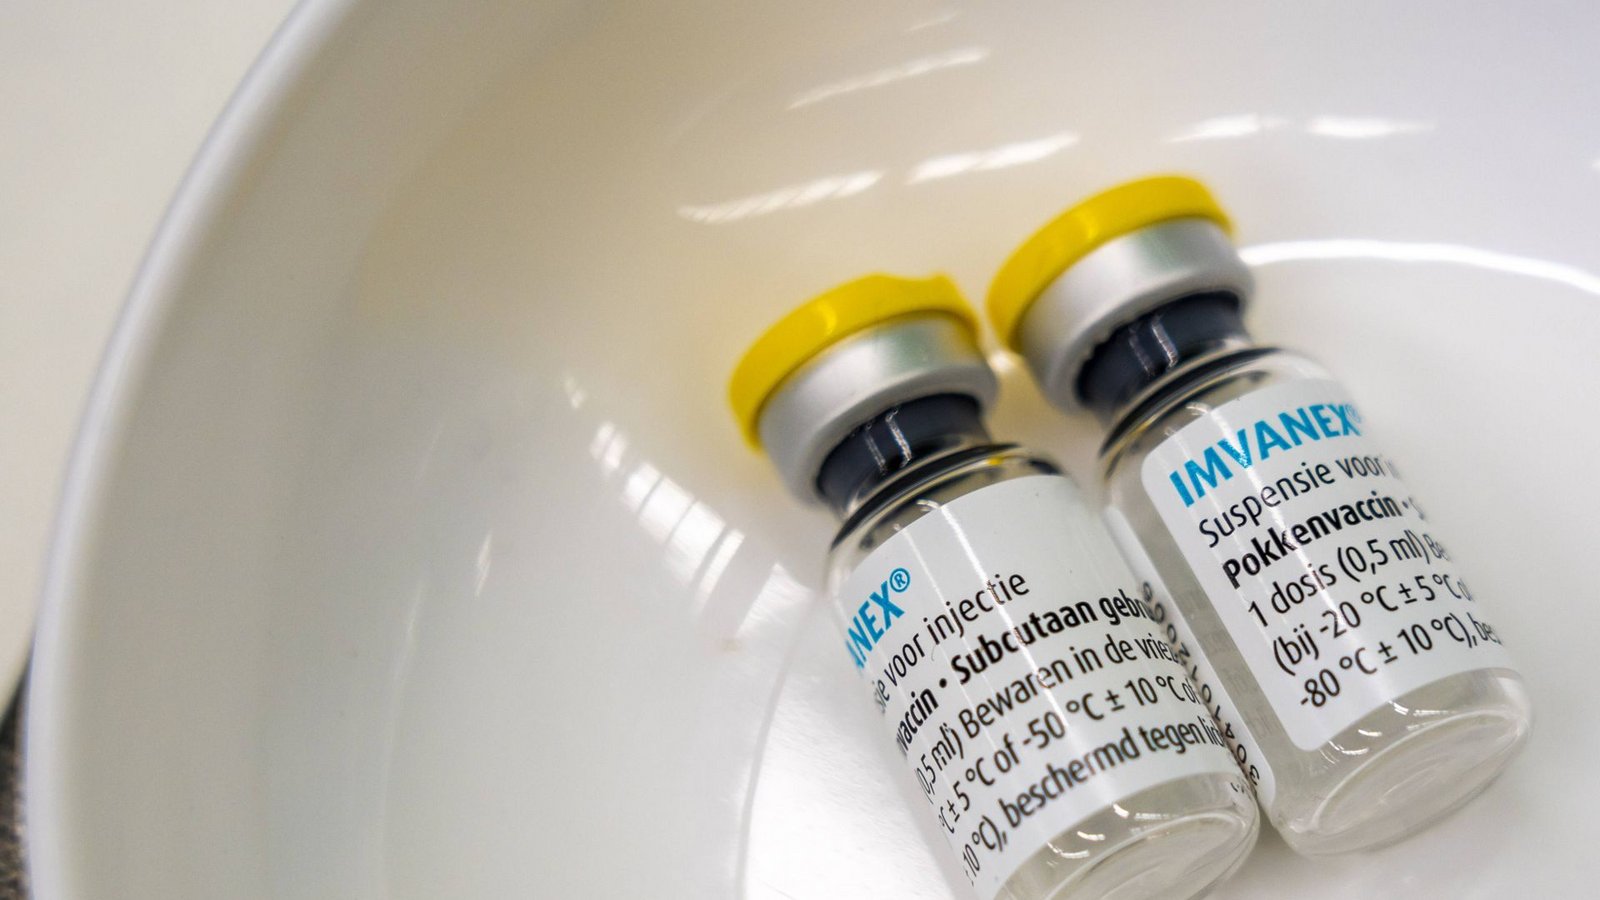 Impfstoff gegen AffenpockenFoto: IMAGO/ANP/IMAGO/lex van lieshout fotografie